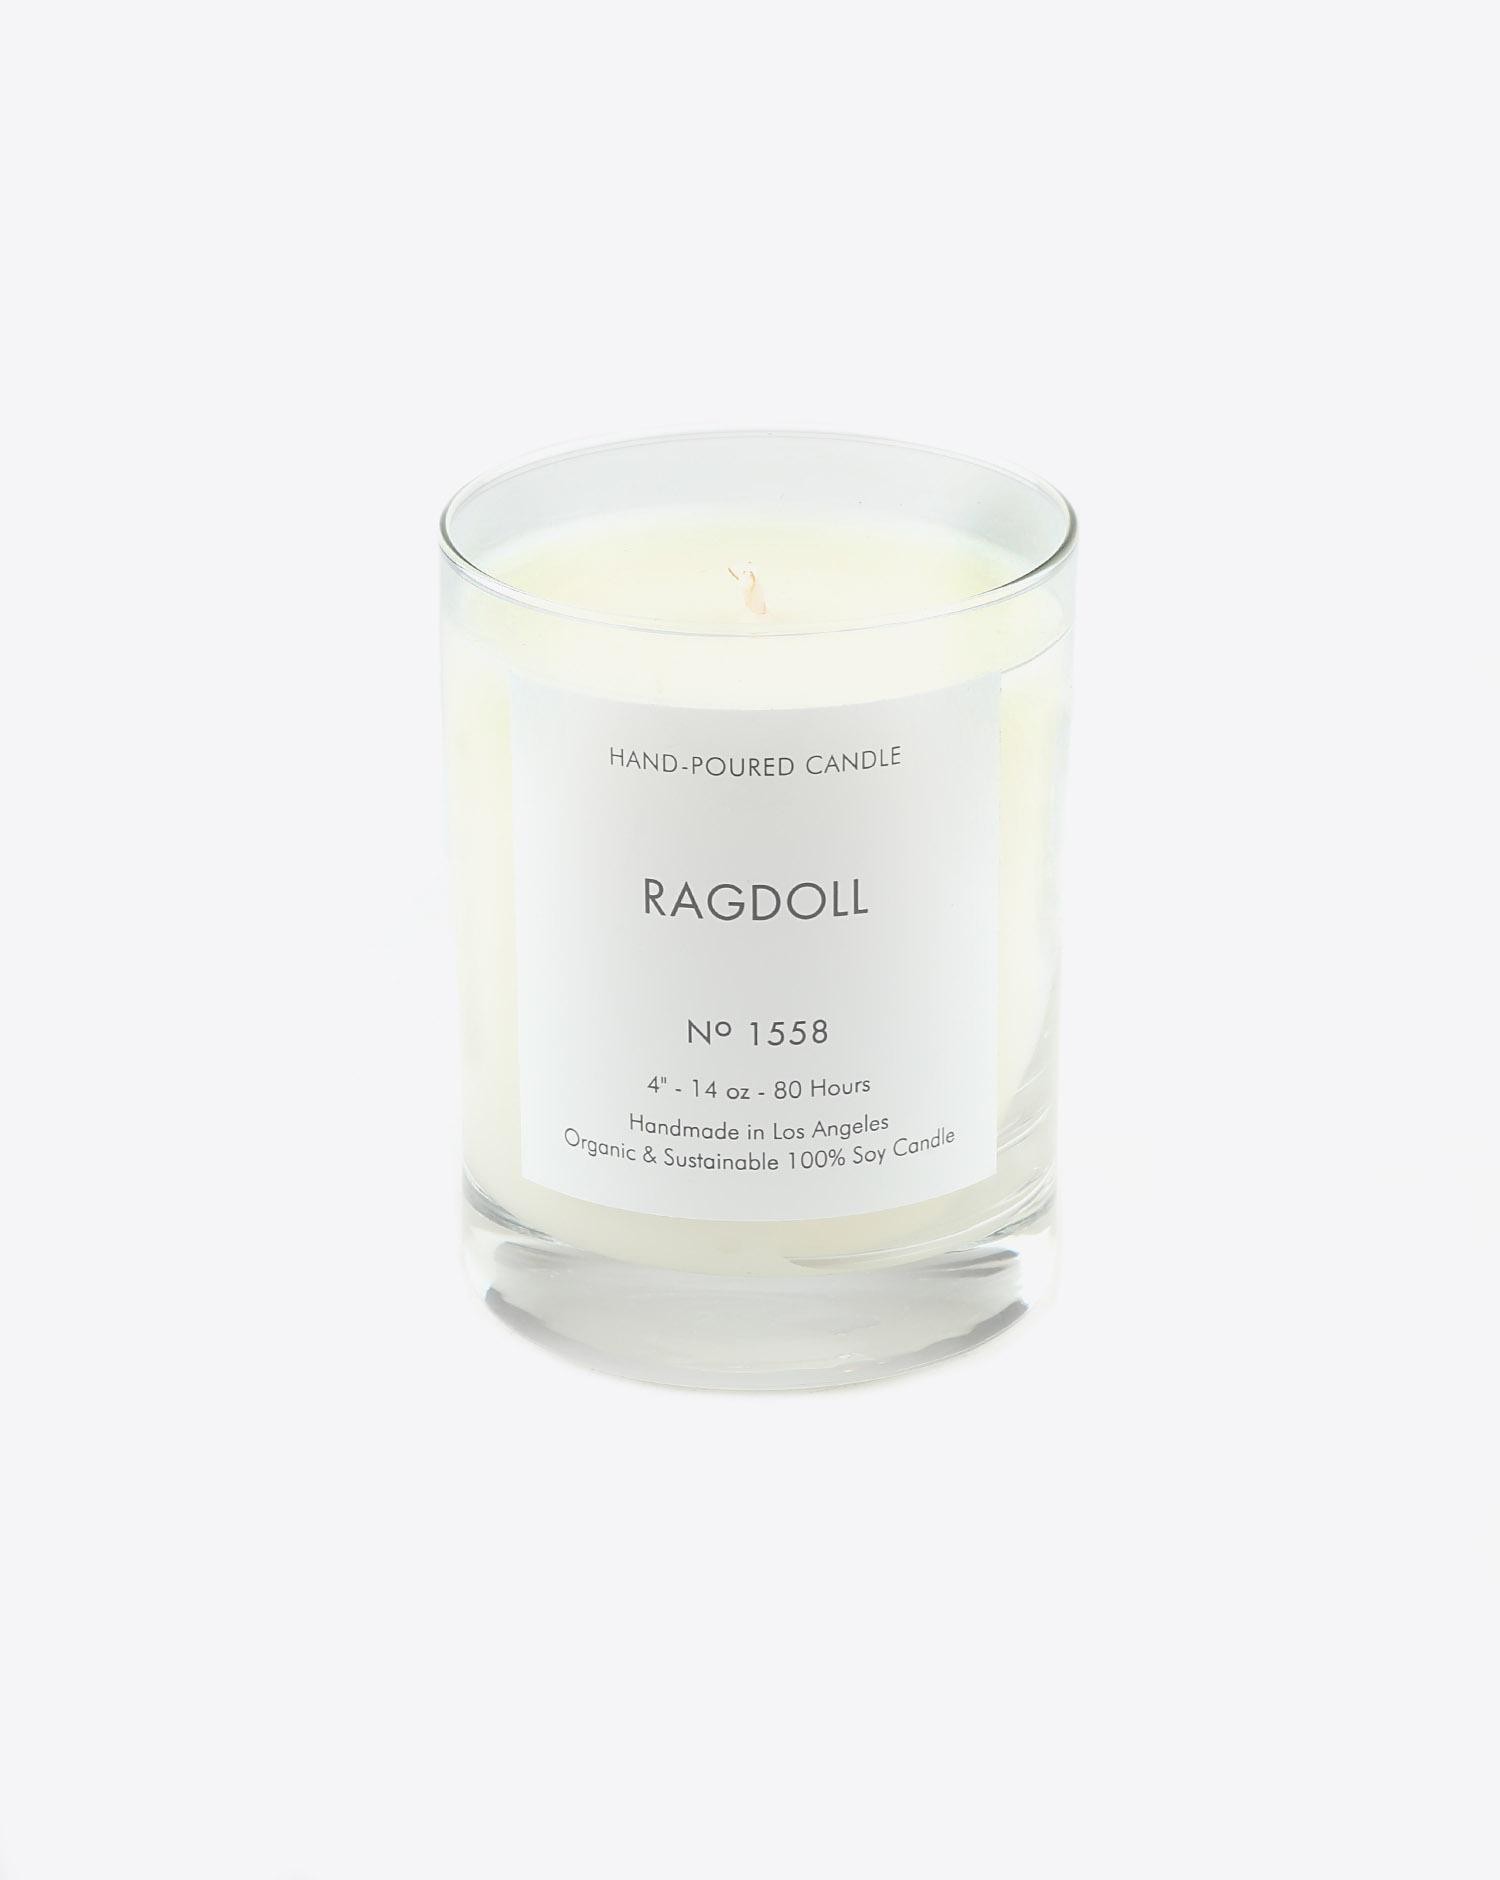 Ragdoll LA Bougie - Hand Poured Candle - 1558